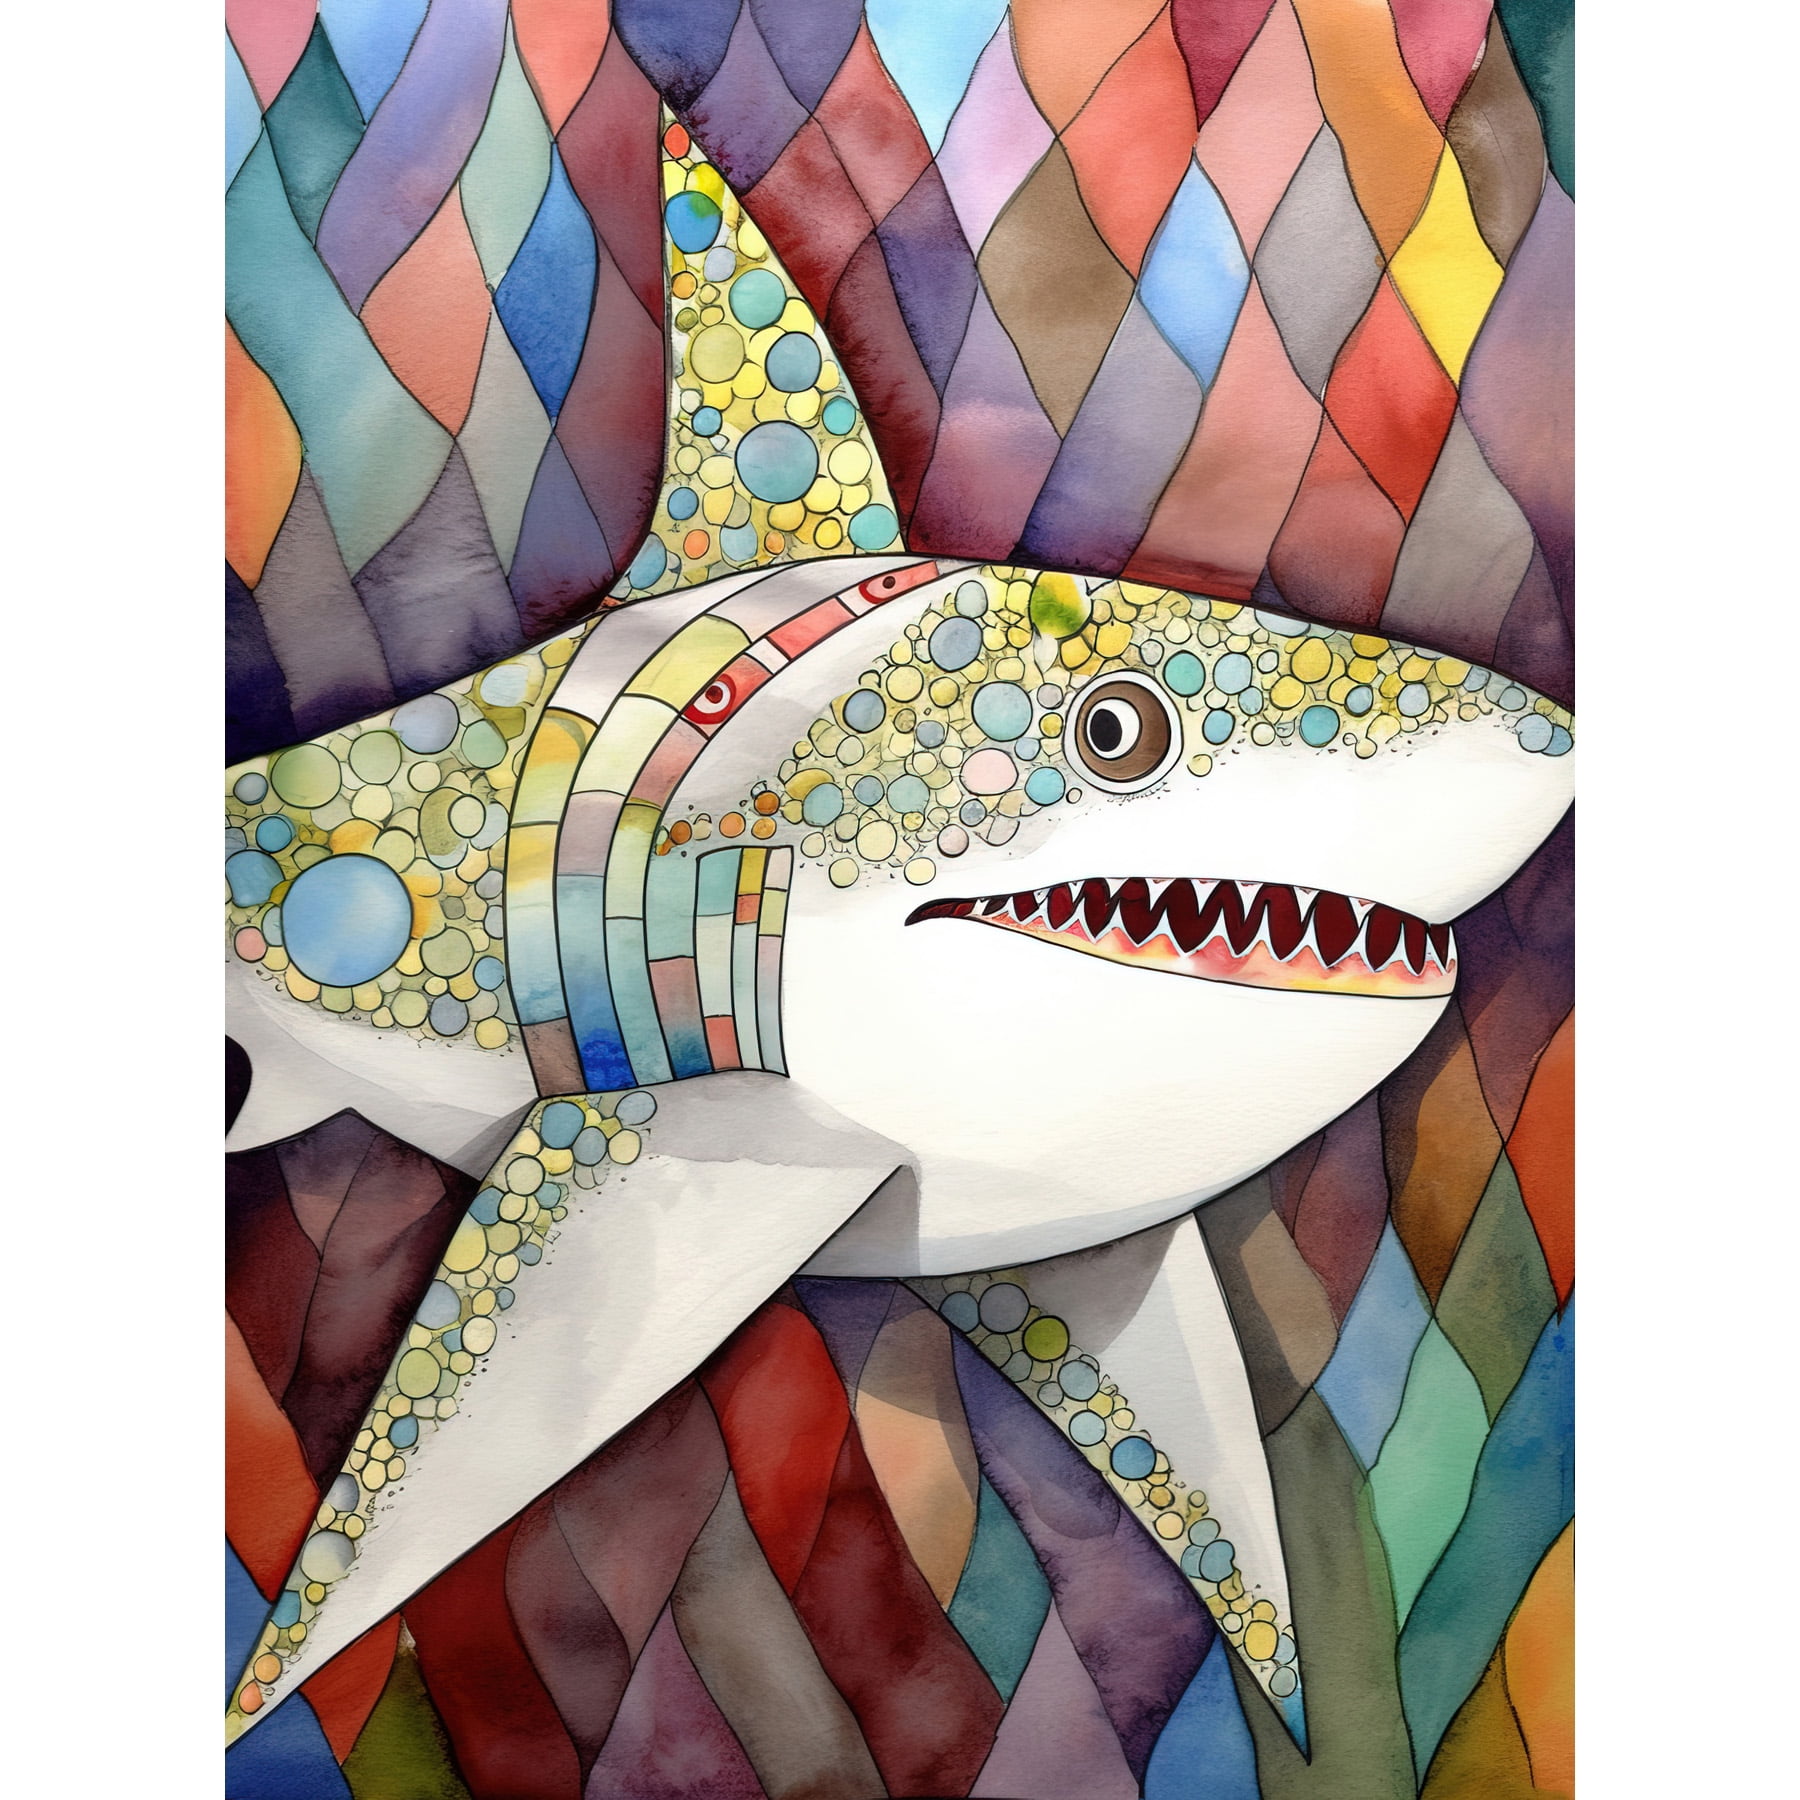 Great White Shark Folk Art Watercolour Painting Unframed Wall Art Print Poster Home Decor Premium, Size: Unframed Paper 12x16